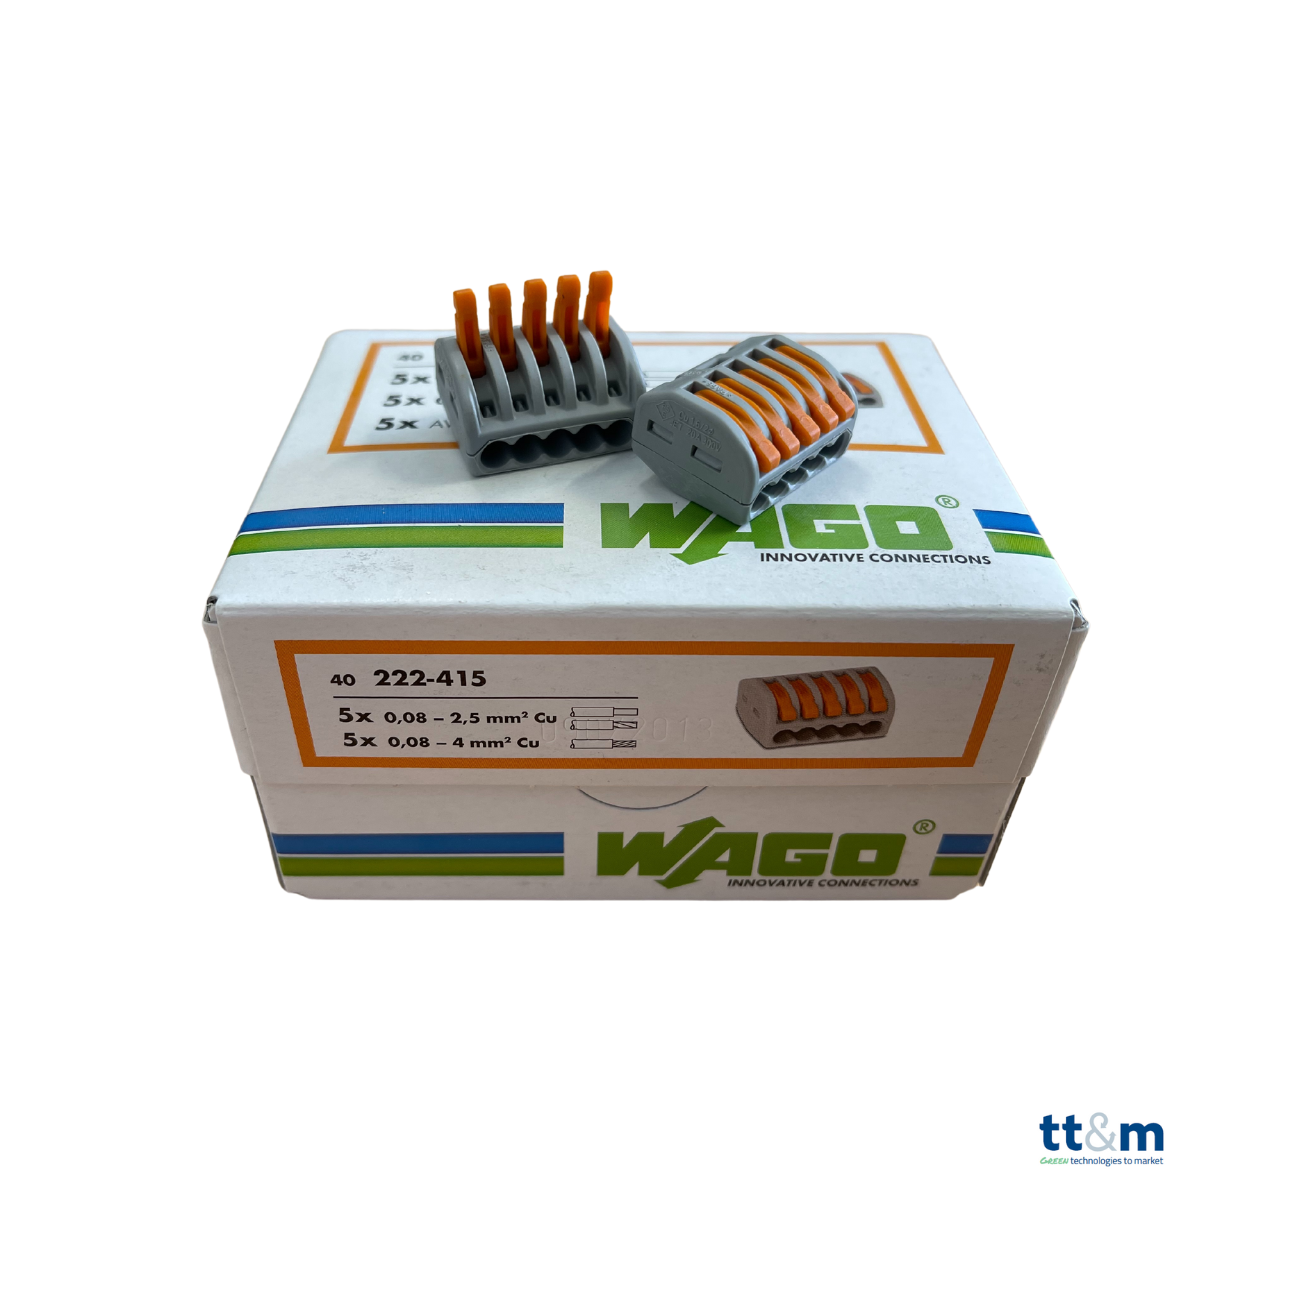 WAGO Verbindungsklemme 5-polig, 2,5-4mm², fl. Leit., grau - 222-415 (40 Stk.)